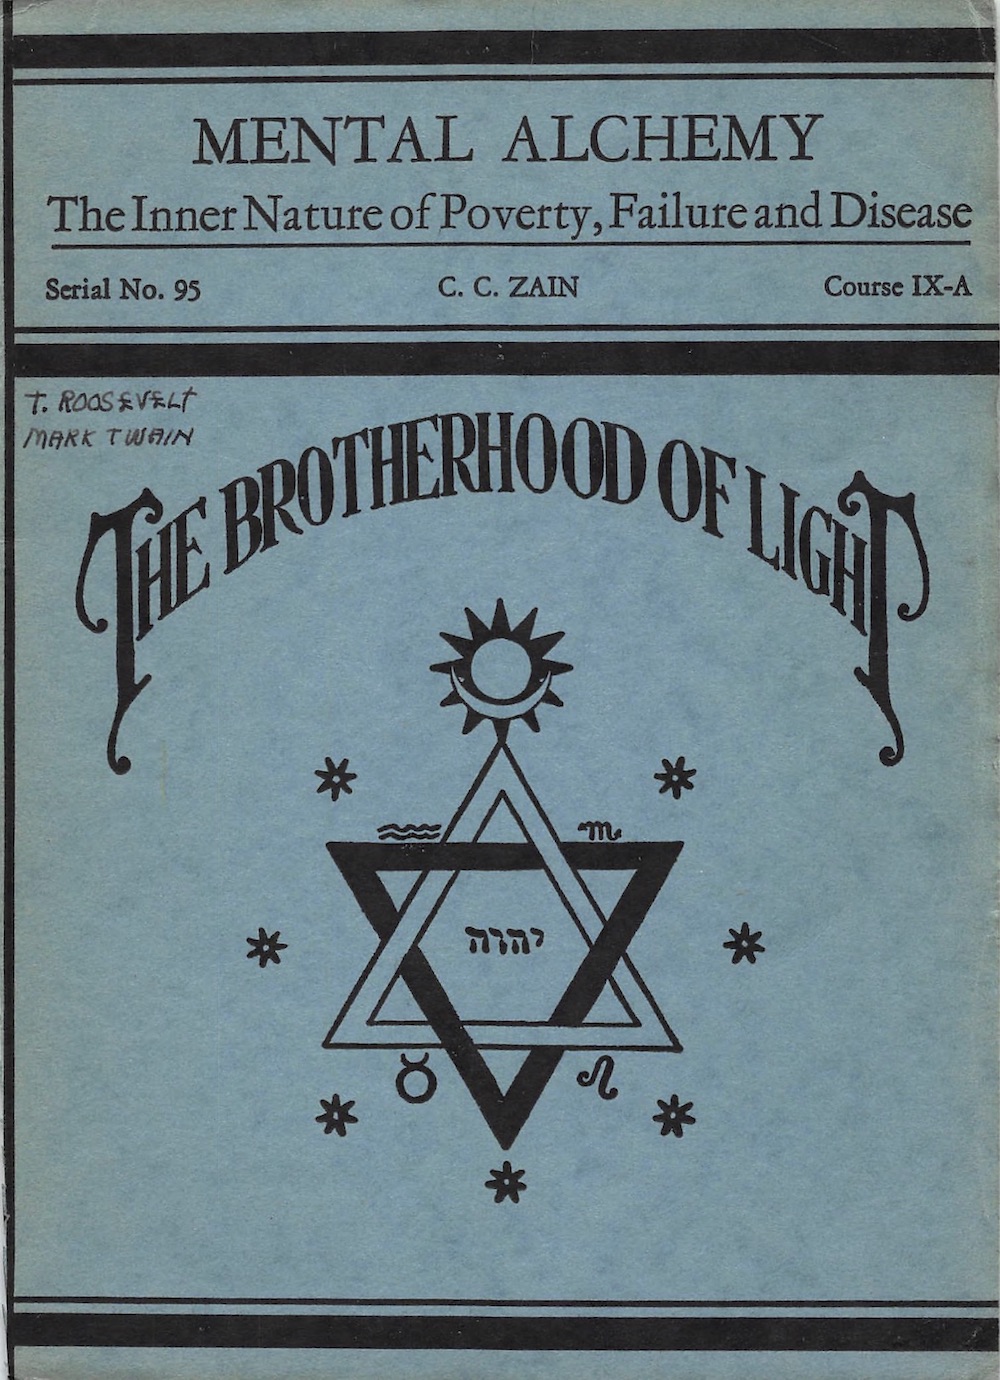 brotherhood of light courses pdf